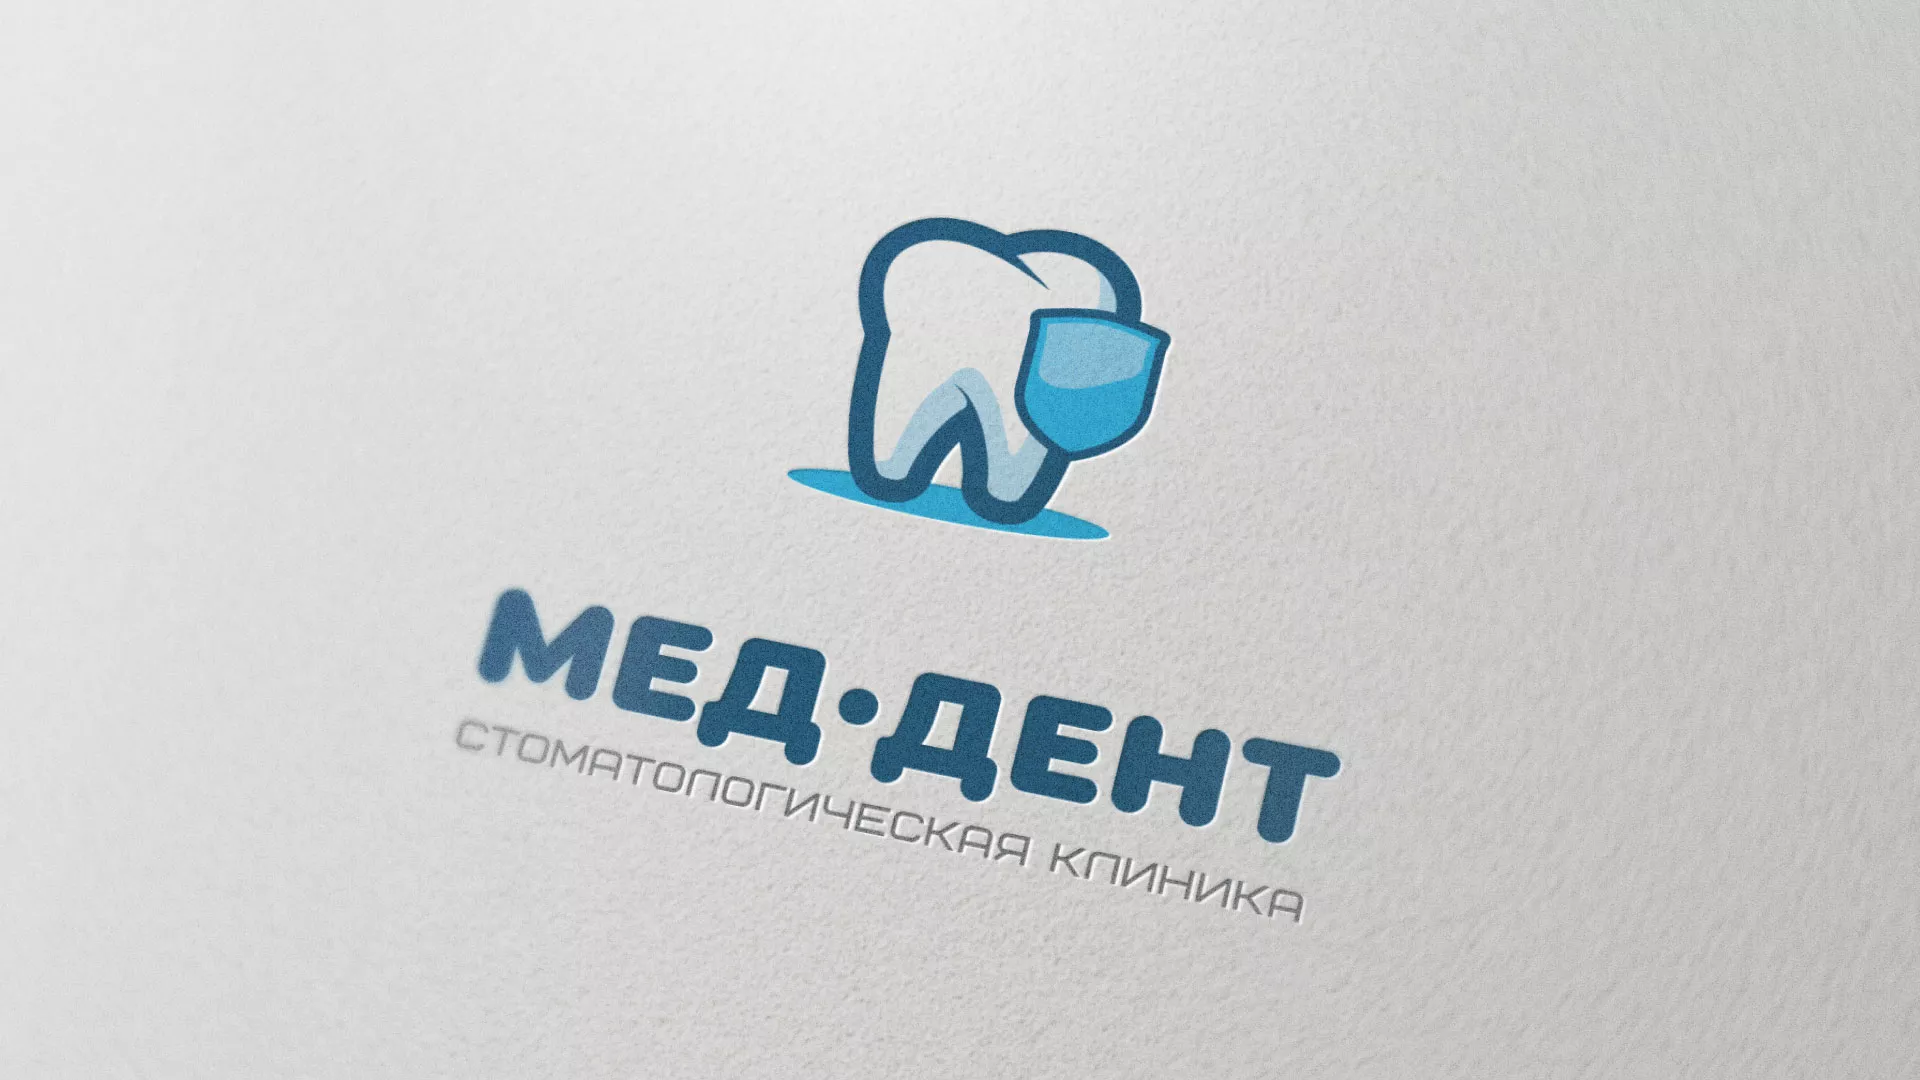 Разработка логотипа стоматологической клиники «МЕД-ДЕНТ» в Южно-Сахалинске